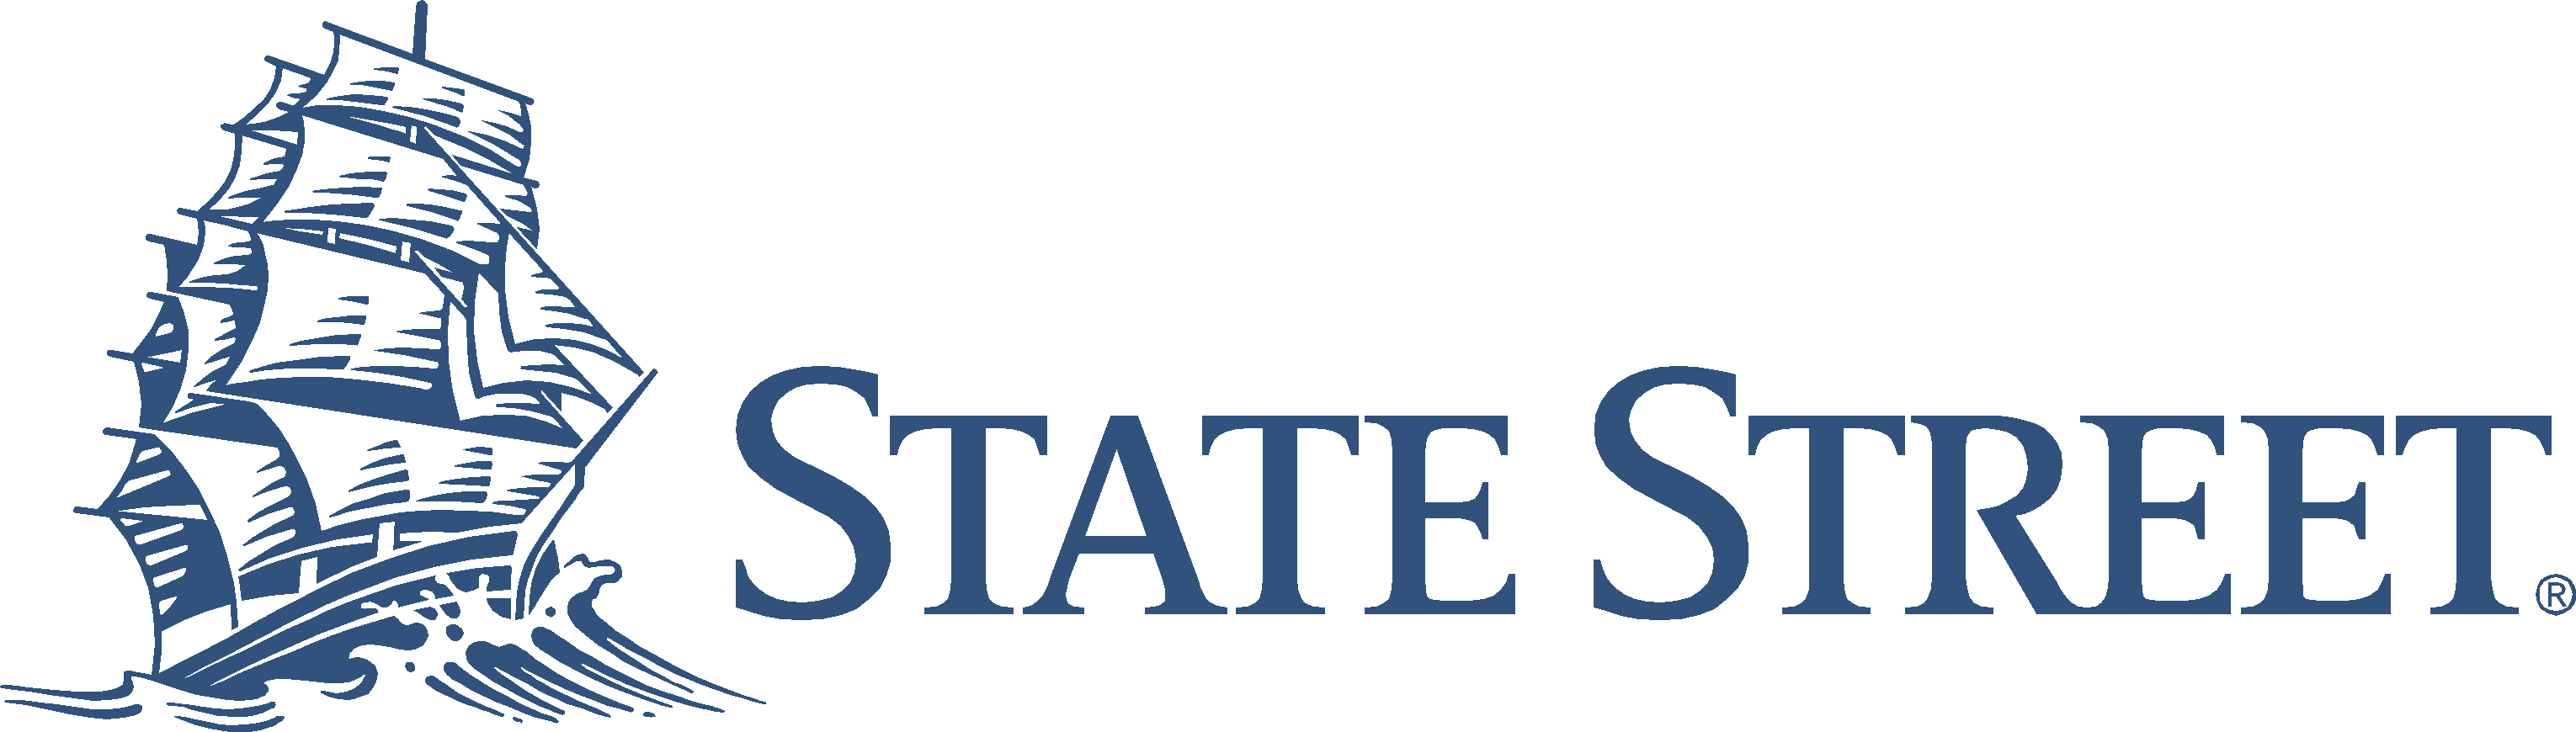 State Street Brand Logo